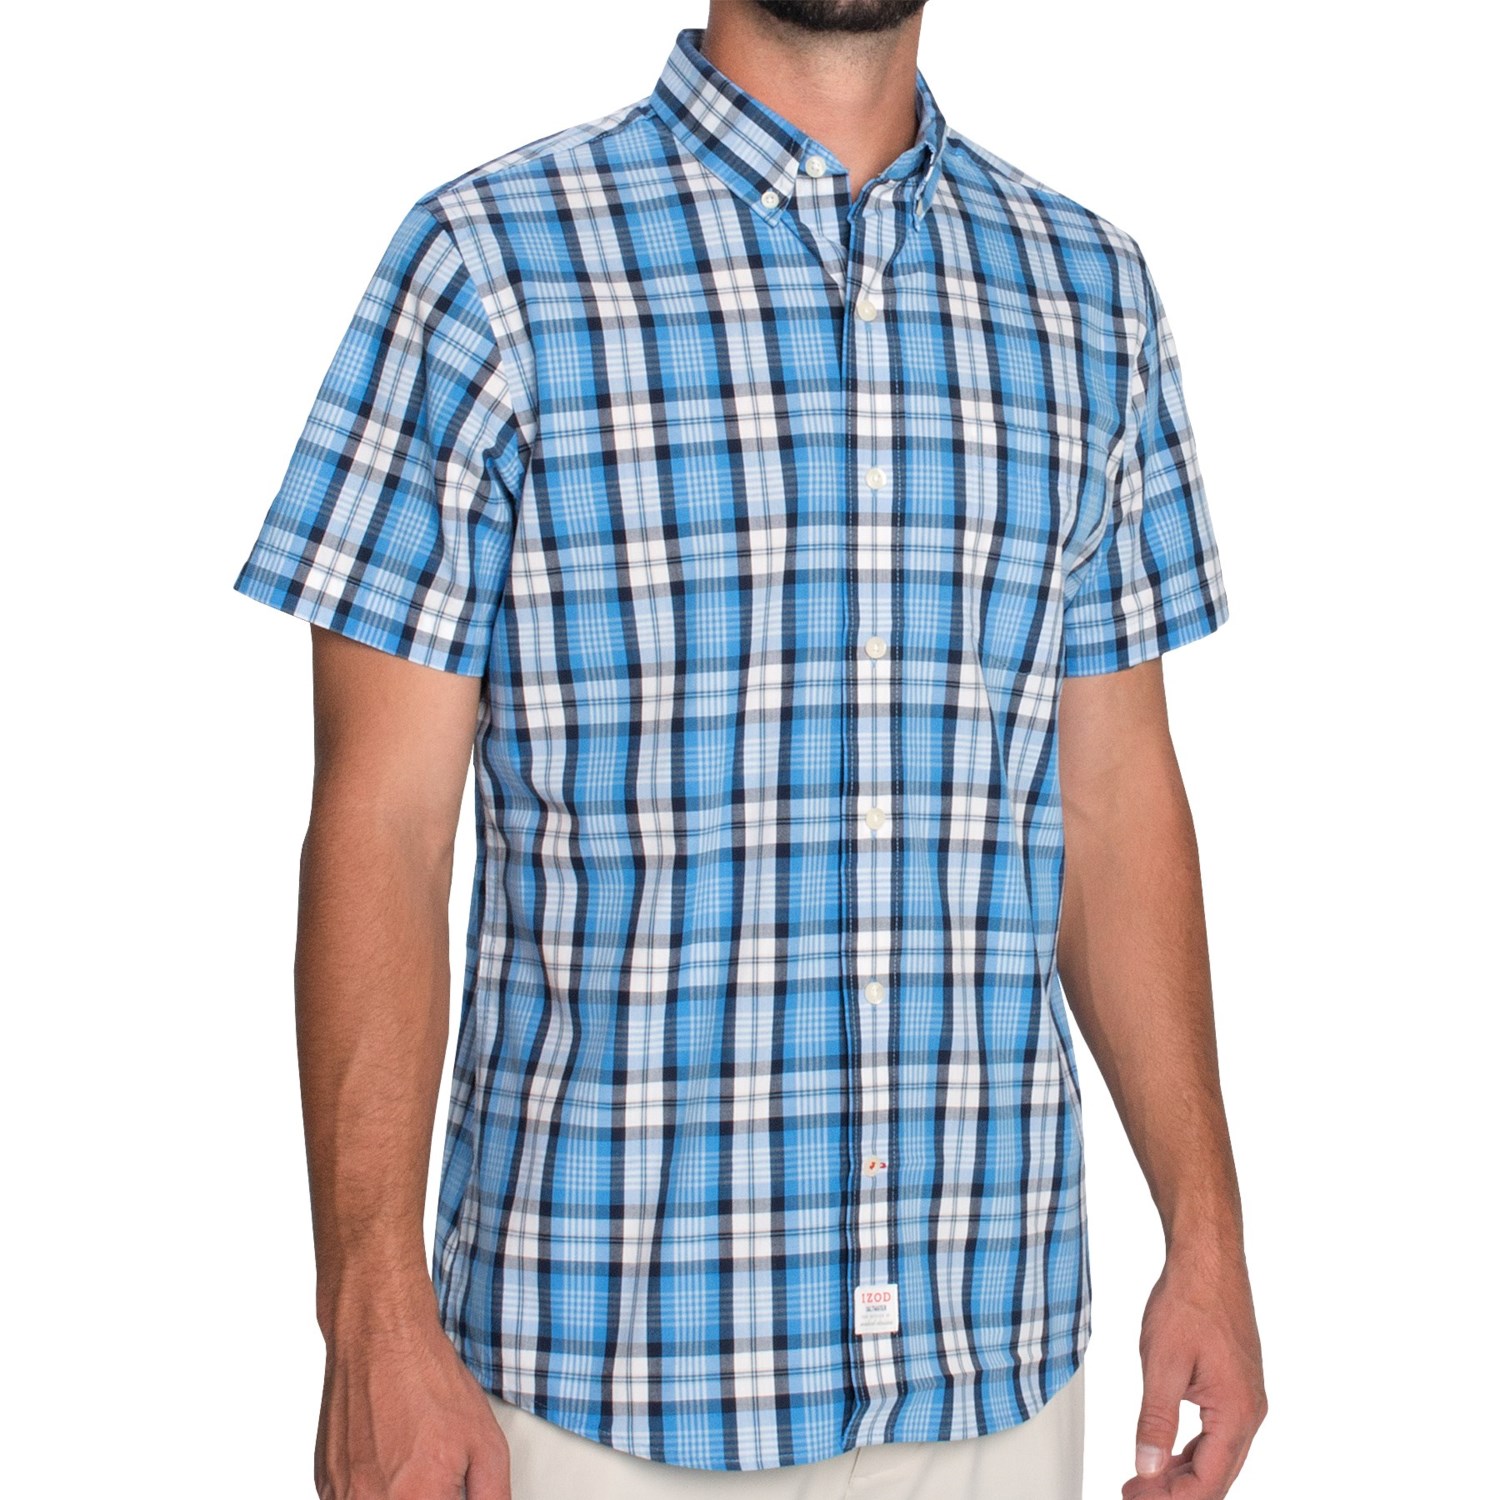 IZOD Saltwater Plaid Shirt (For Men) - Save 50%